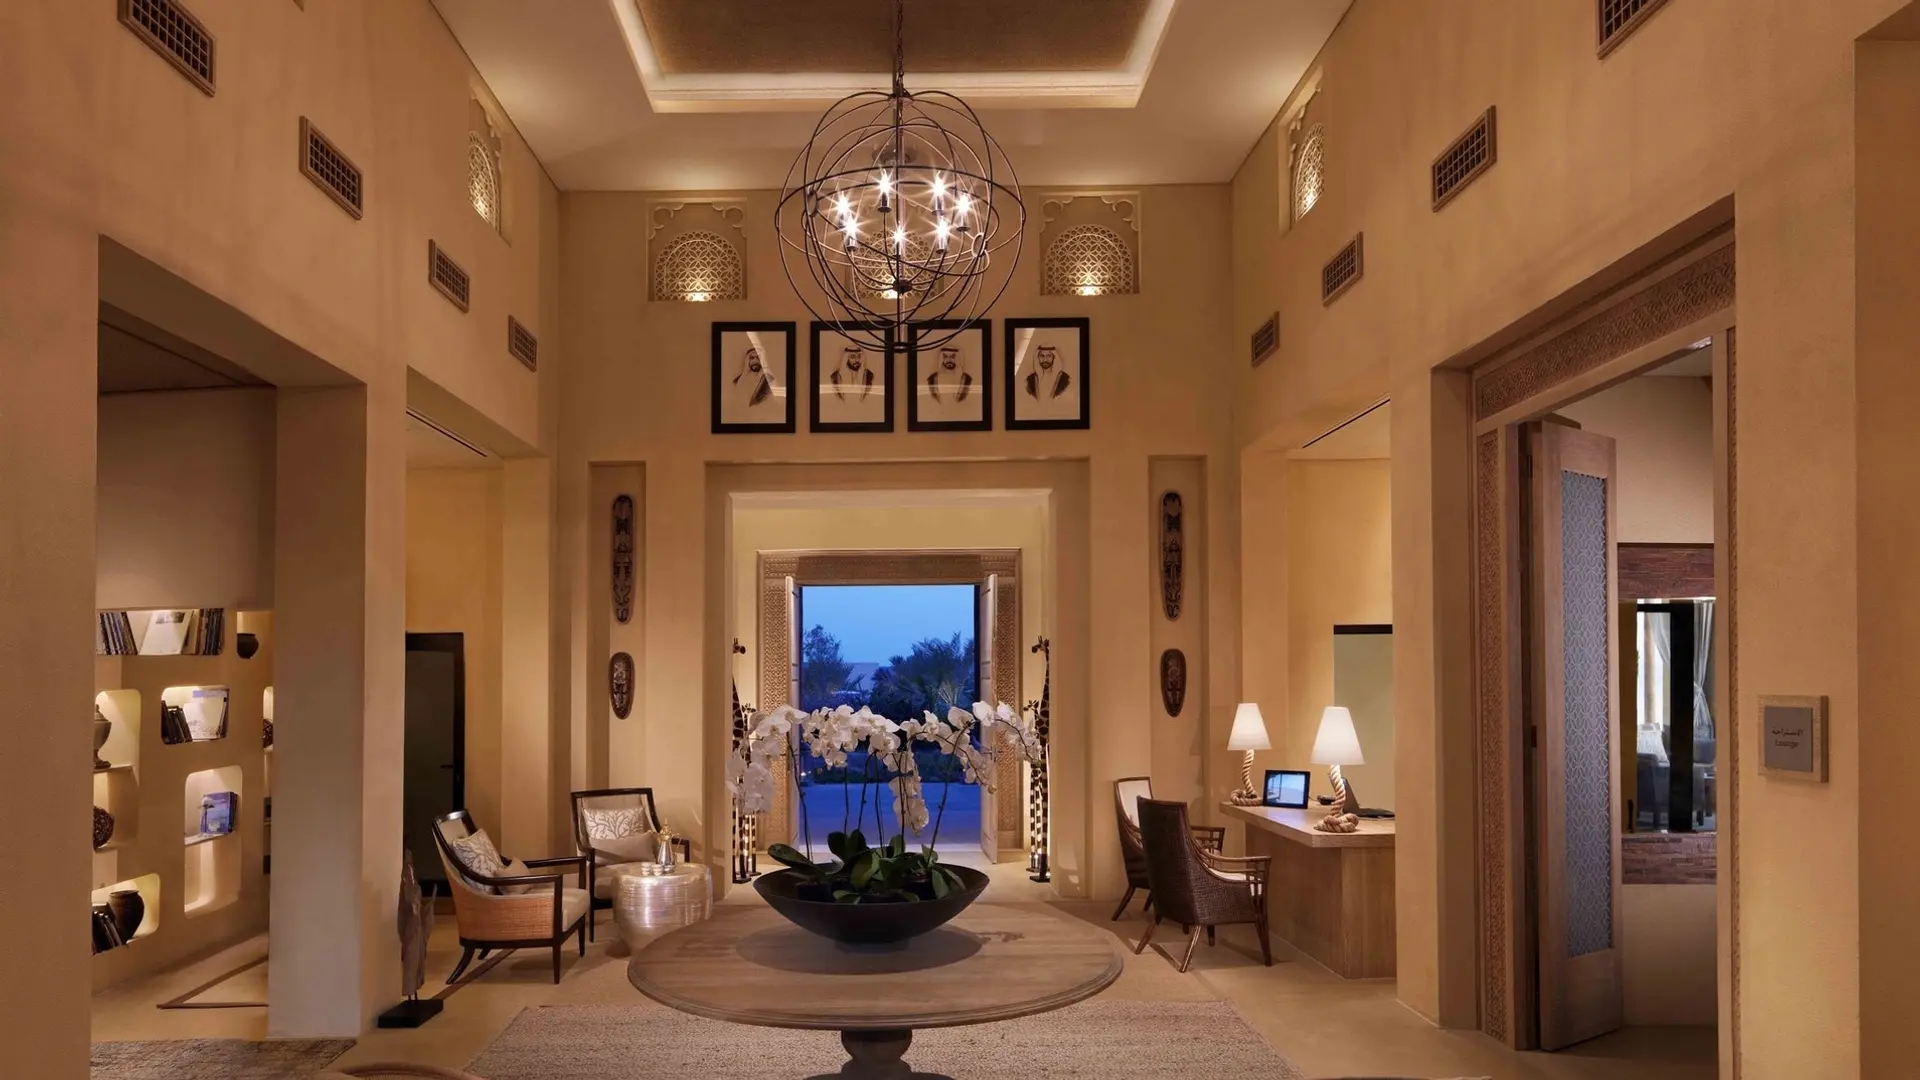 Hotels Toplists - The Best Luxury Hotels in Abu Dhabi